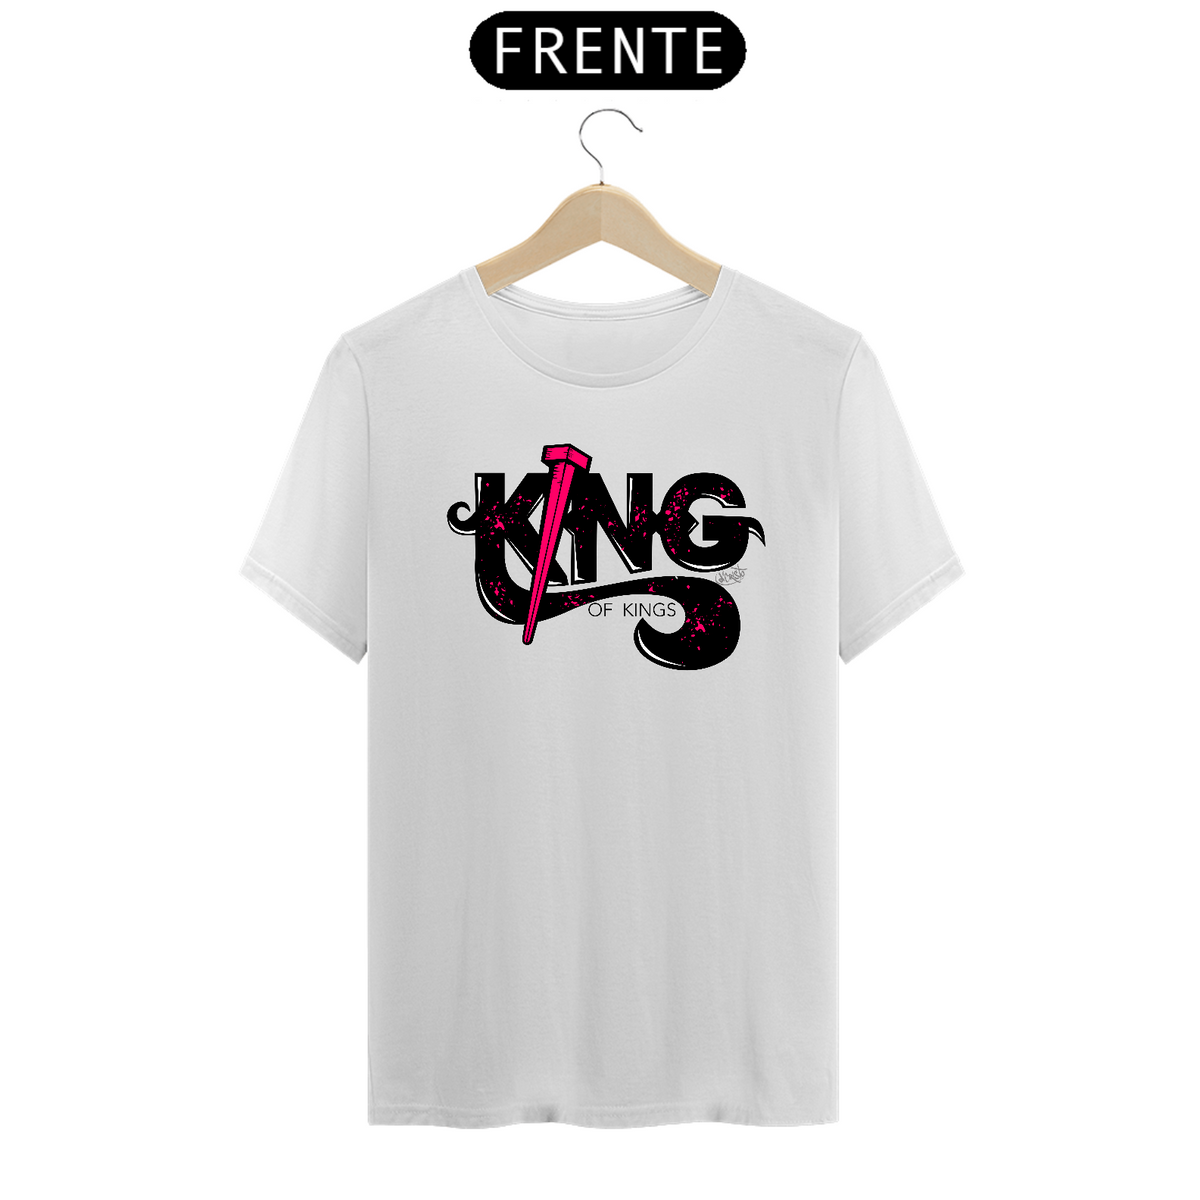 Nome do produto: Camiseta King of kings (cores claras)